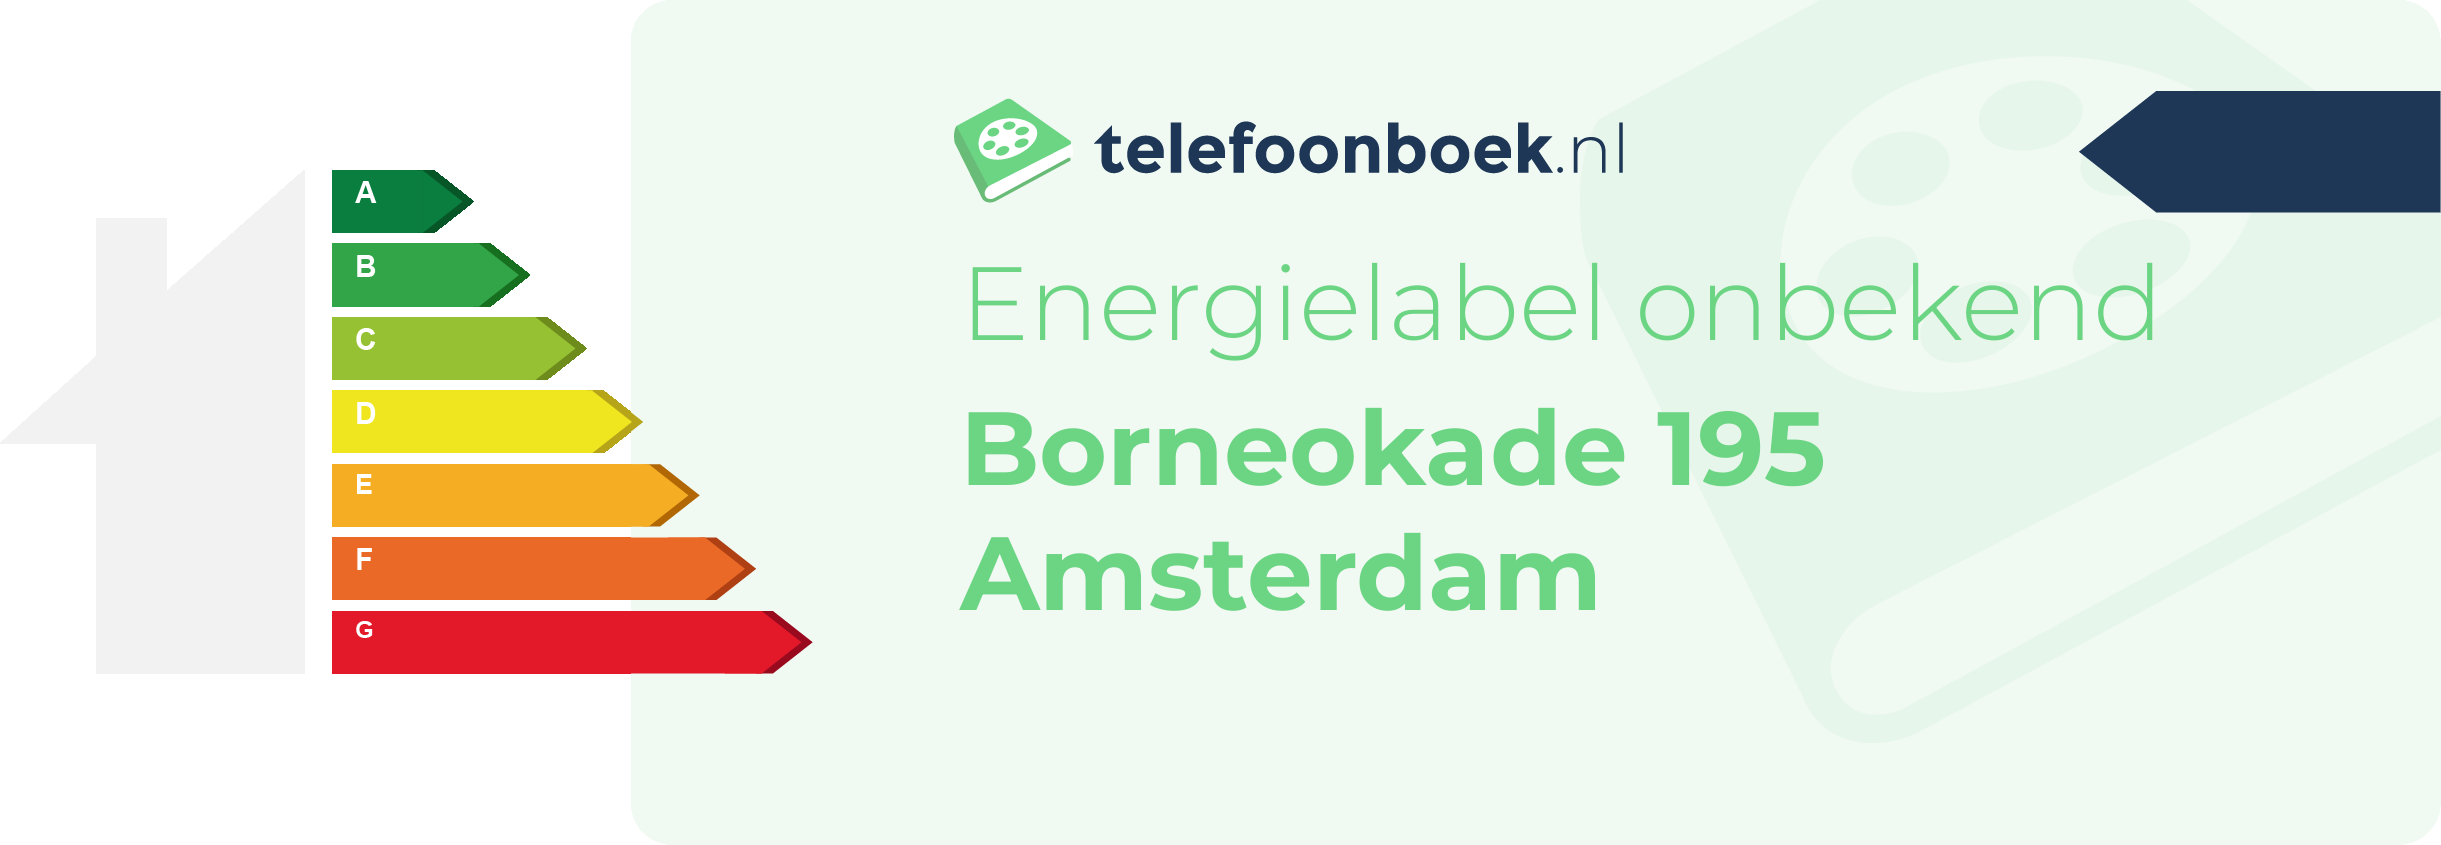 Energielabel Borneokade 195 Amsterdam